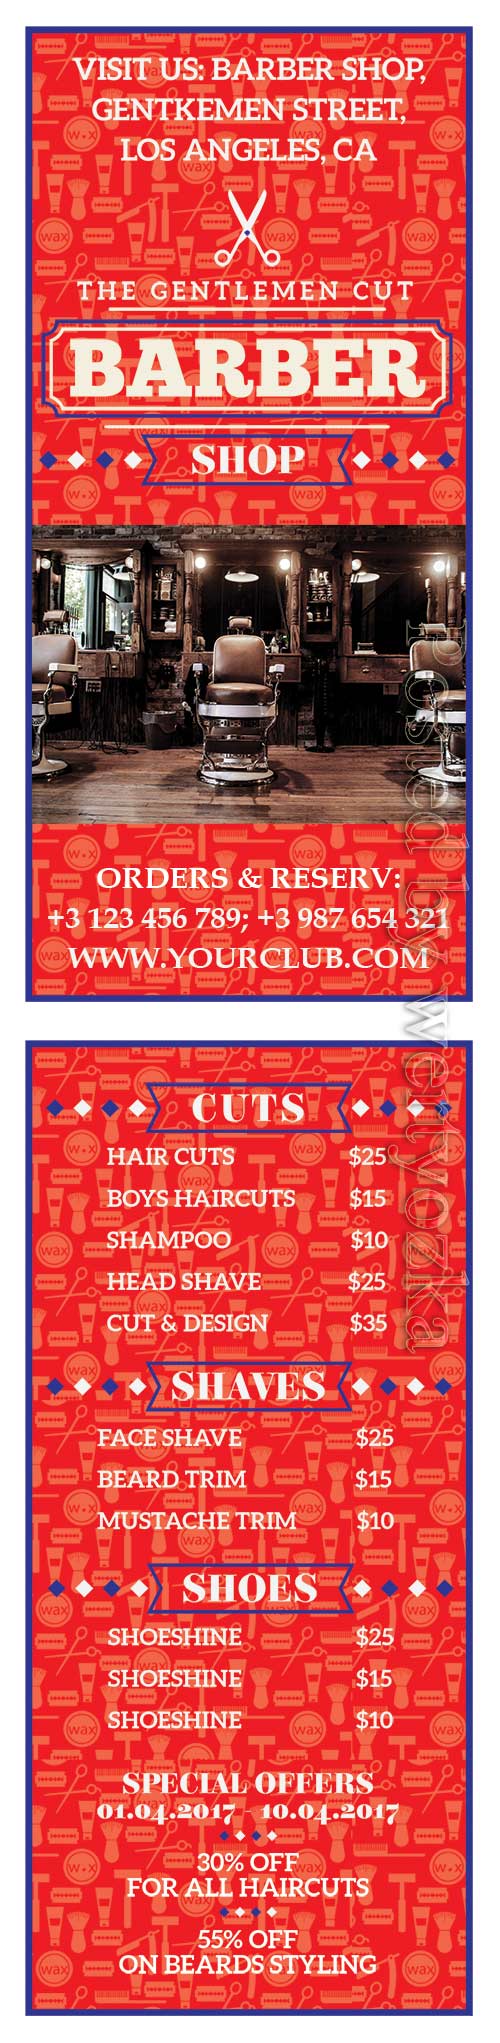 Barber shop psd flyer template